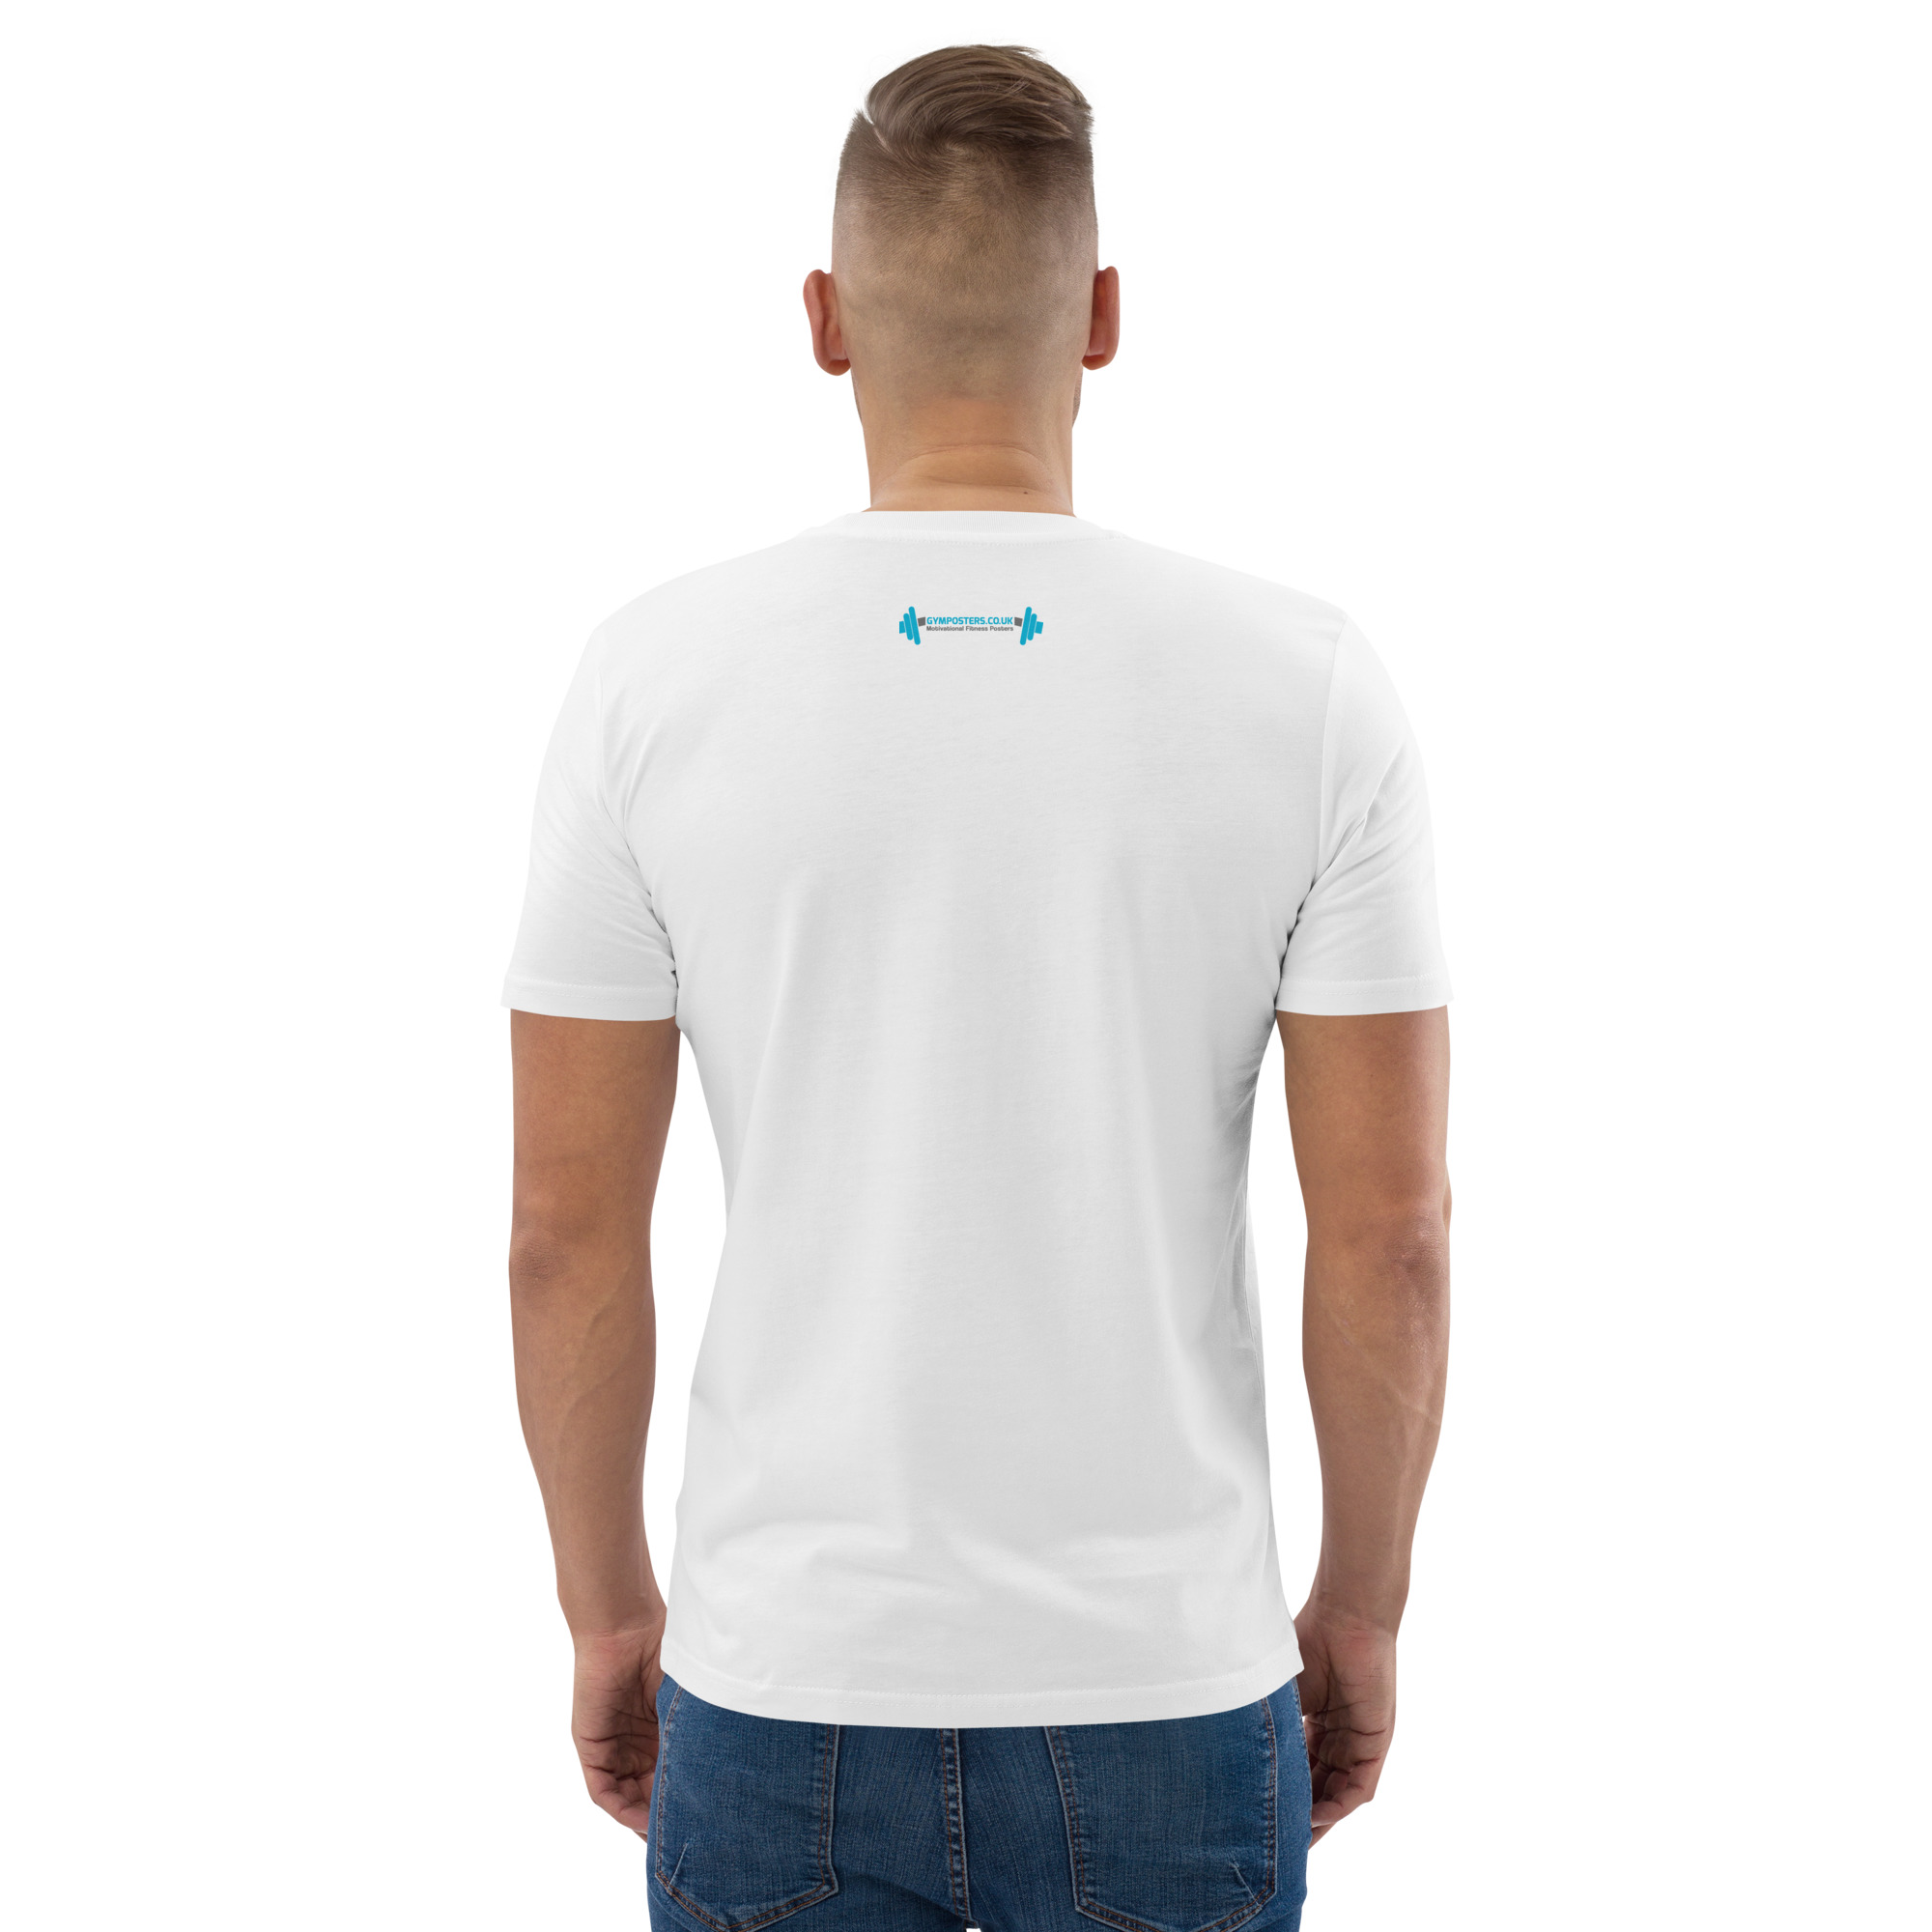 unisex-organic-cotton-t-shirt-white-back-2-657846d5183a6.jpg